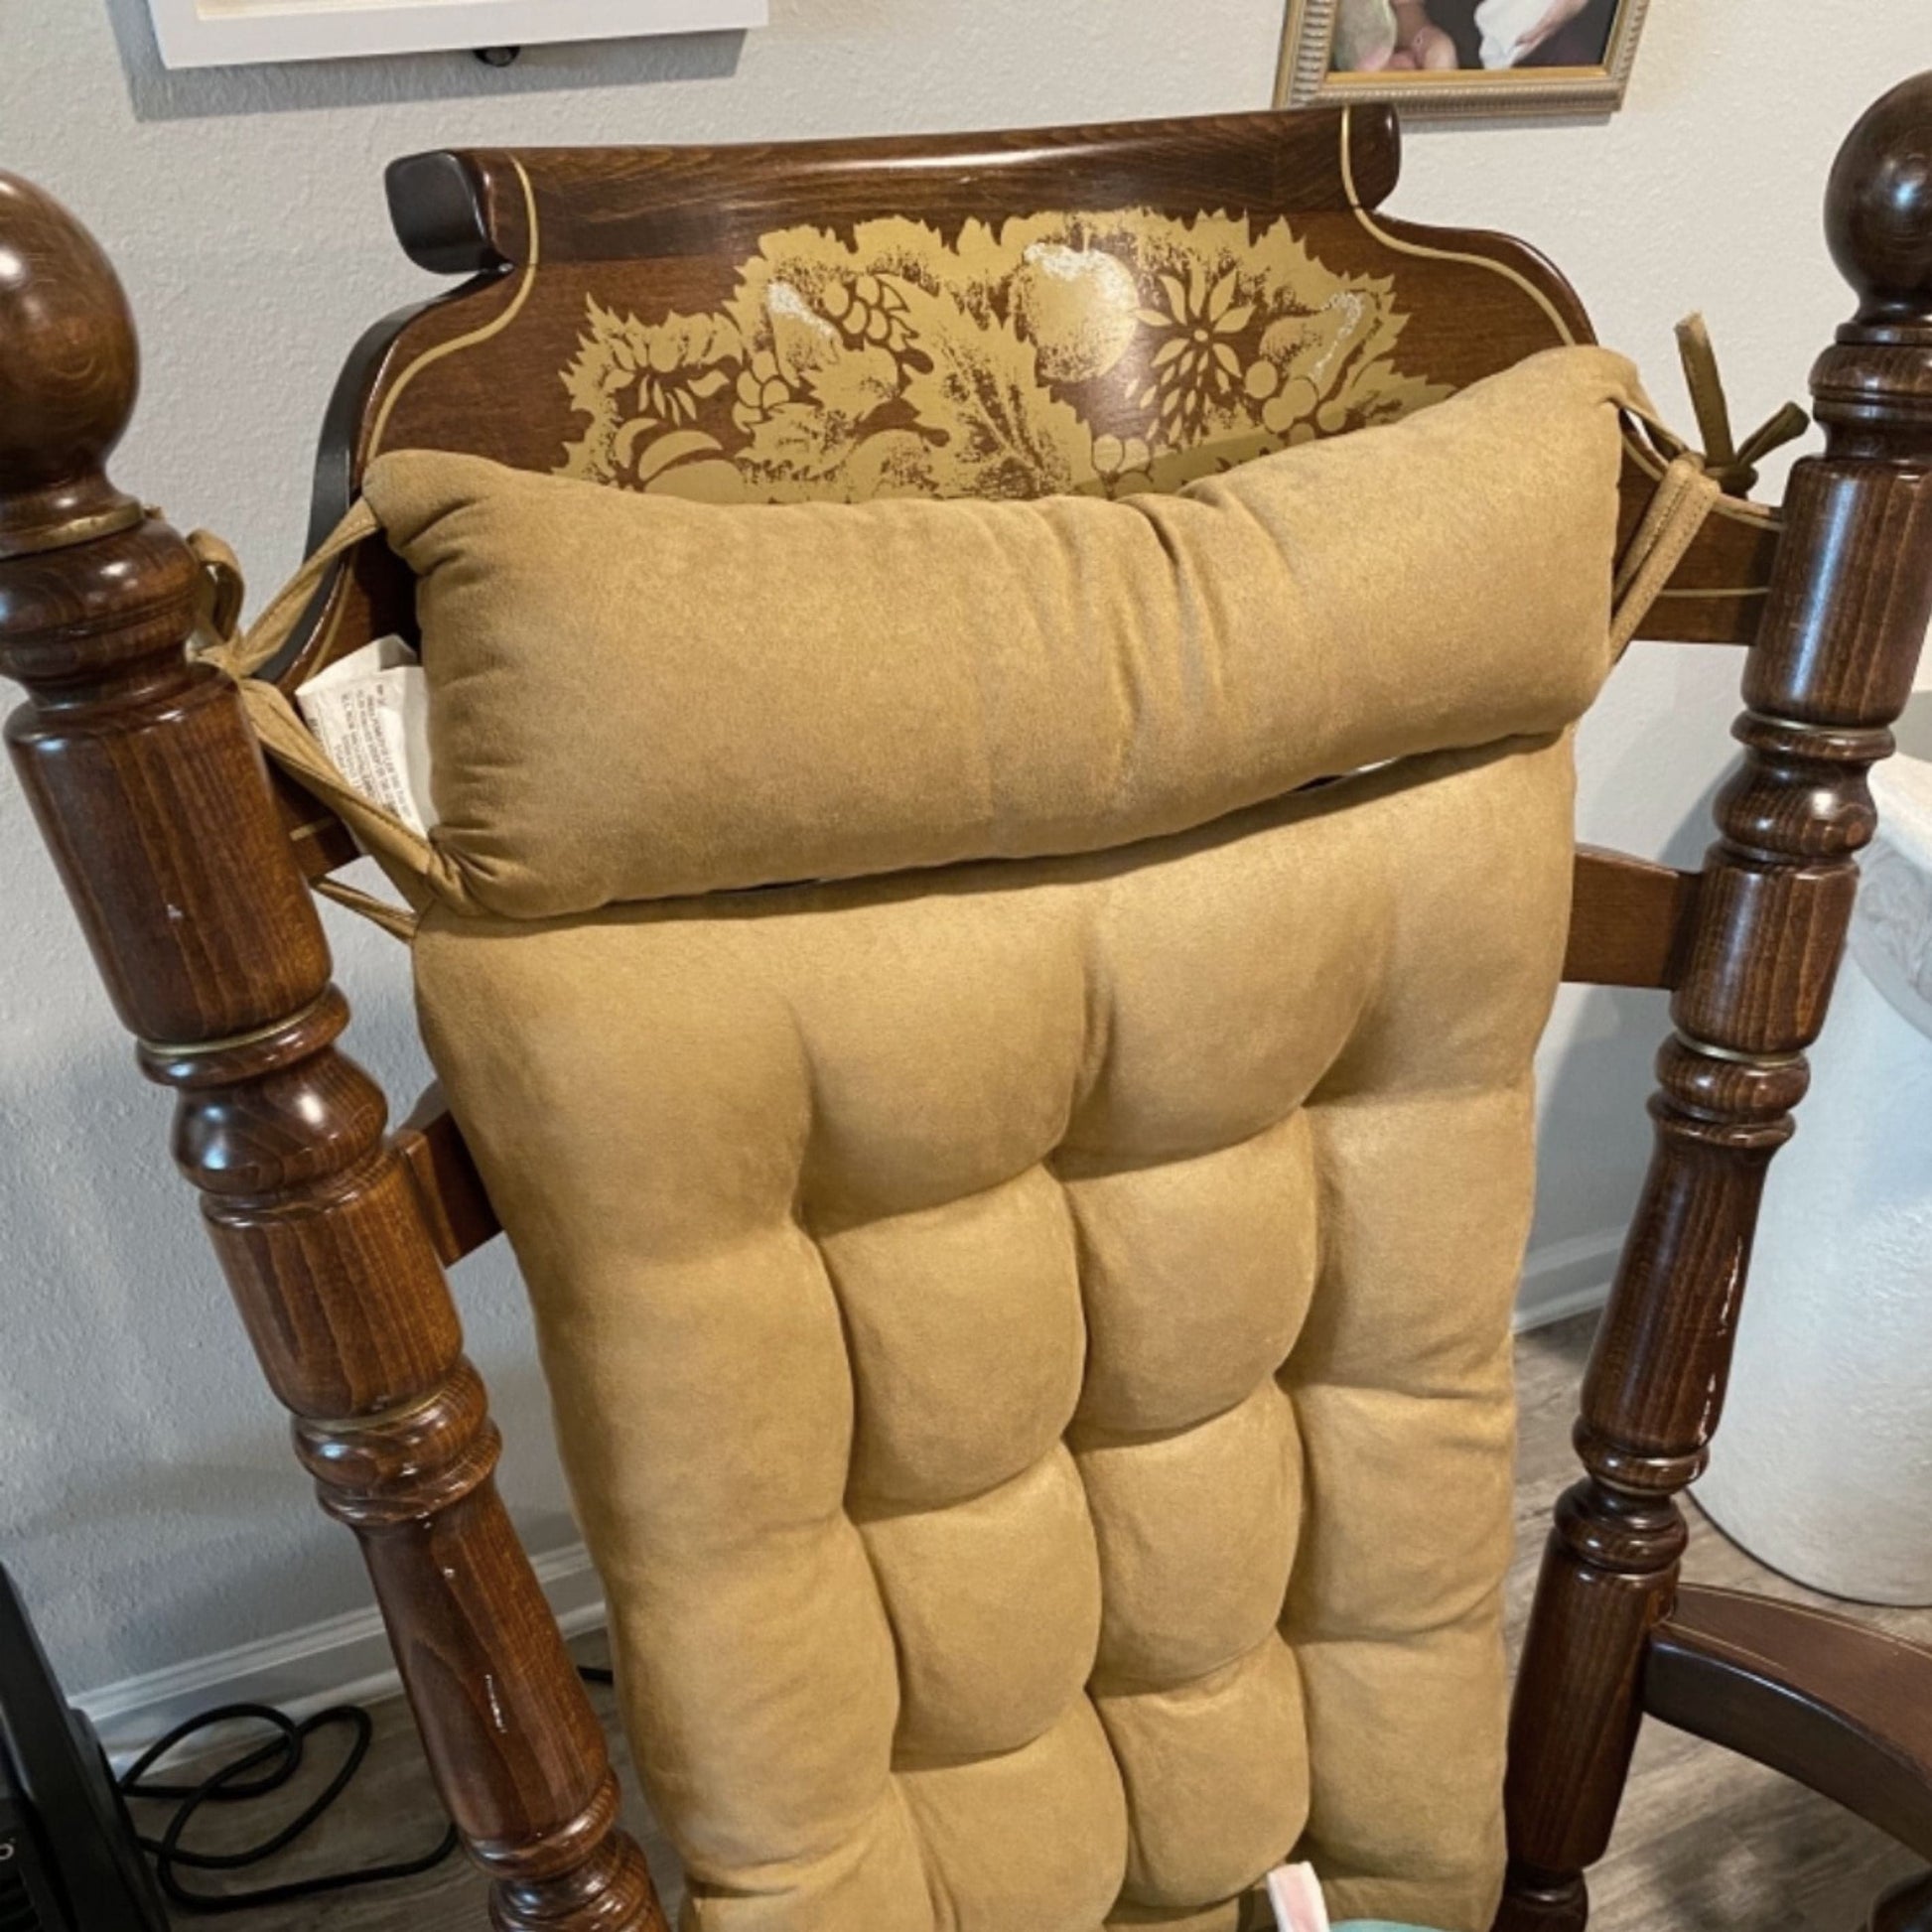 Tan rocking chair cushion and rocker extender | Barnett Home Decor | Microsuede Camel | Travel Pillow | Neck Roll Pillow